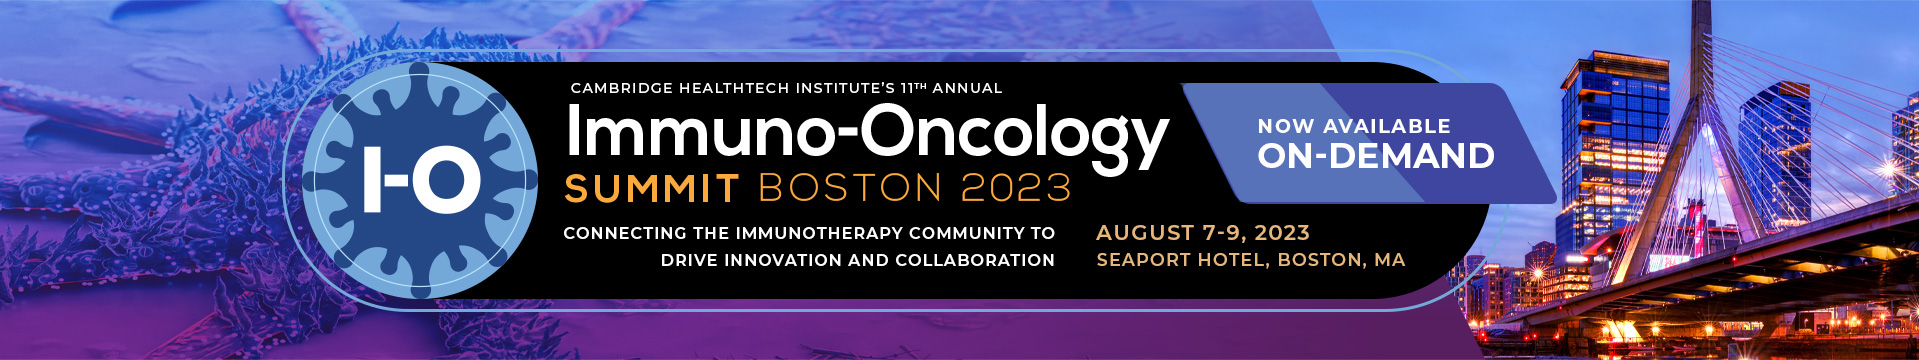 Immuno-Oncology Summit 2023